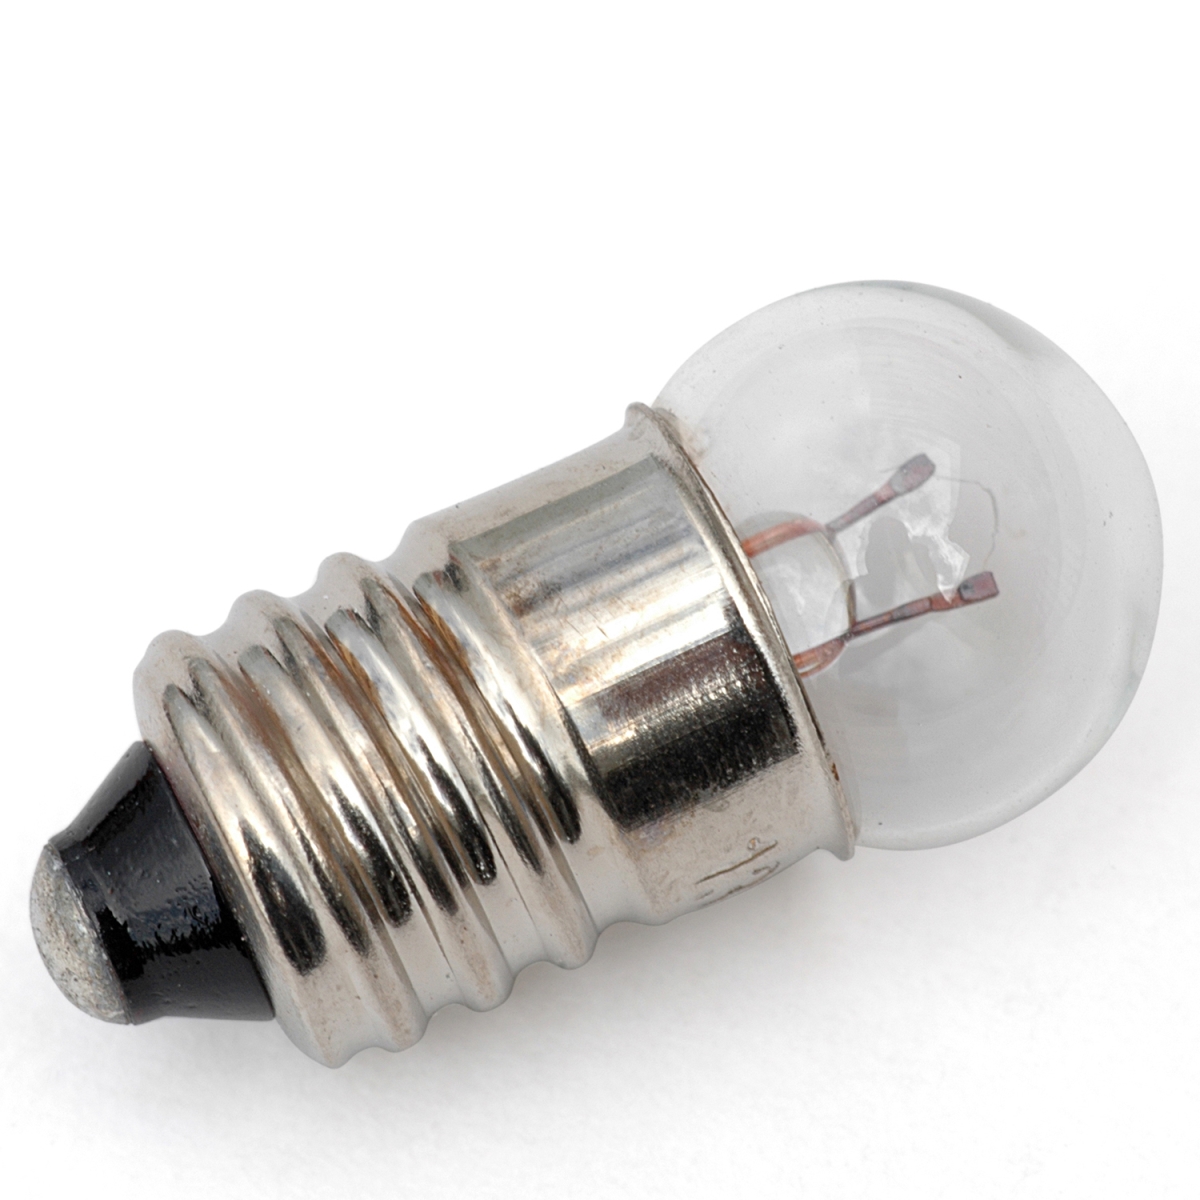 Mb-0131 1.3v 1-d Cell Miniature Light Bulb, Clear